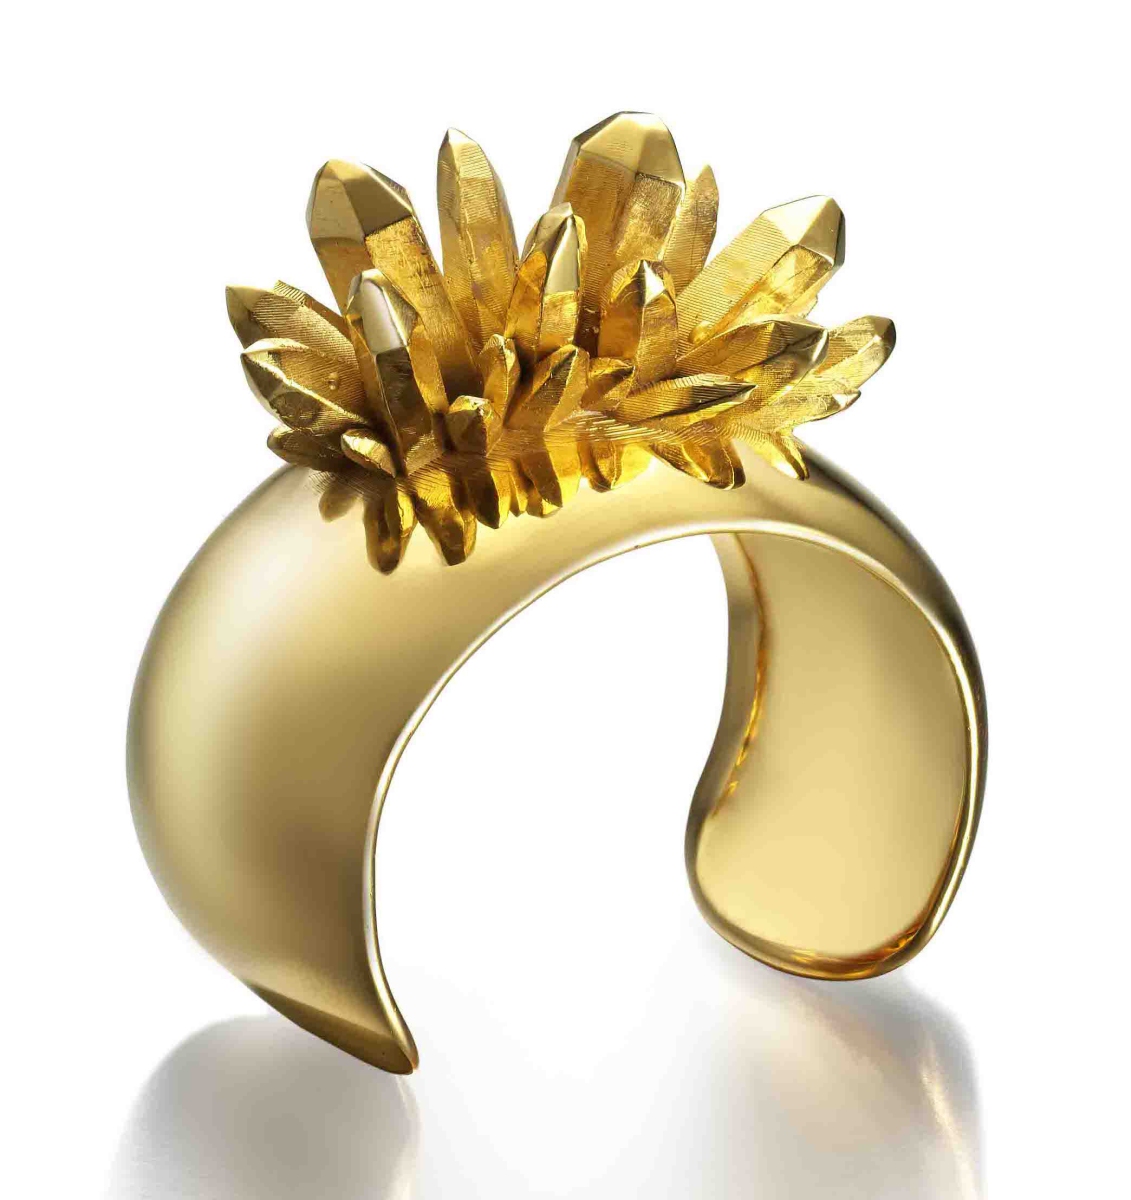 Pin by yna talento on Jewelry inspo  Louis vuitton jewelry, Fashion  jewelry, Bracelet collection